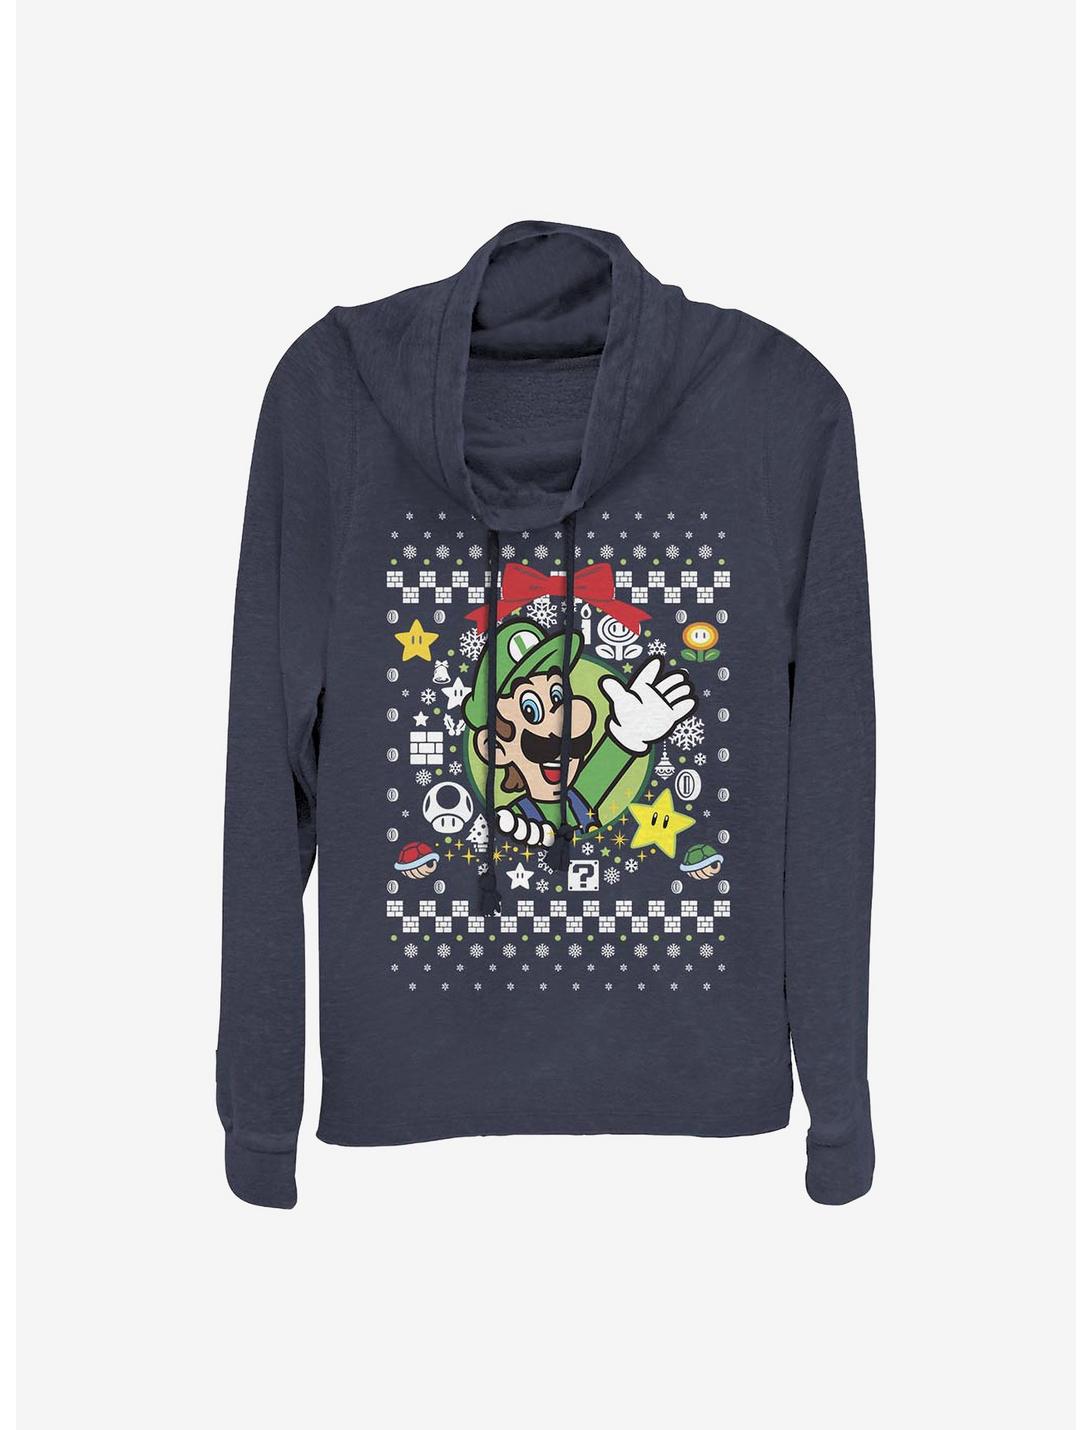 Super Mario Luigi Wreath Ugly Christmas Sweater Cowl Neck Long-Sleeve Girls Top, NAVY, hi-res